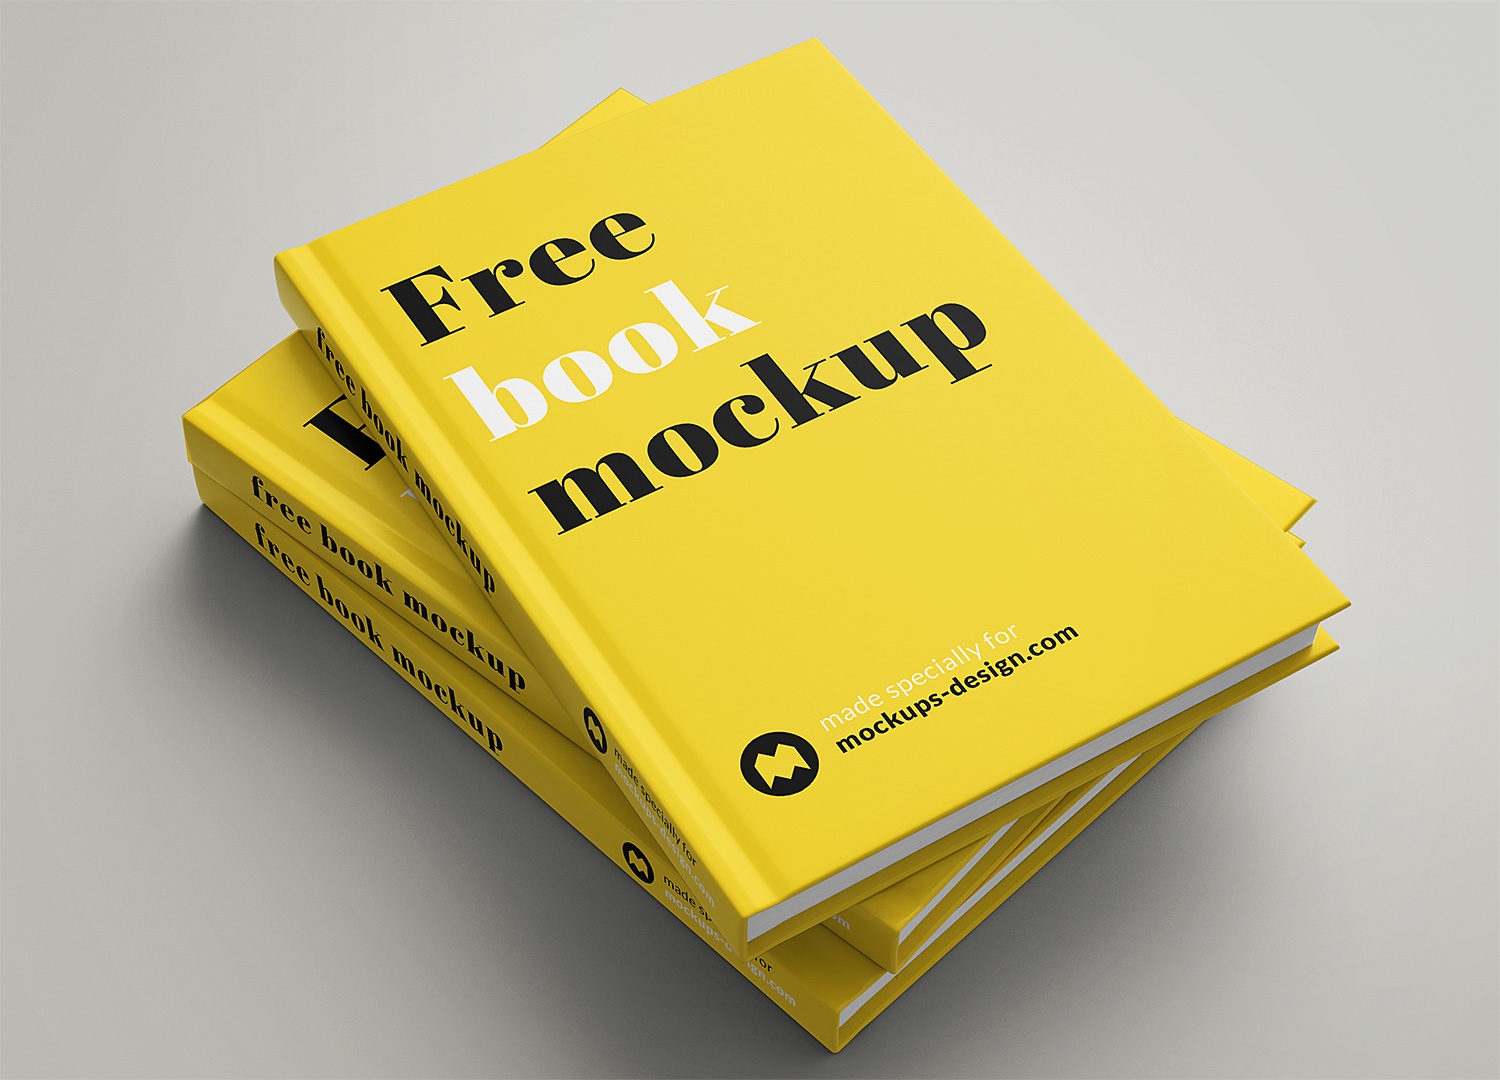 Download Book Mockup Free Set in PSD | Mockup World HQ